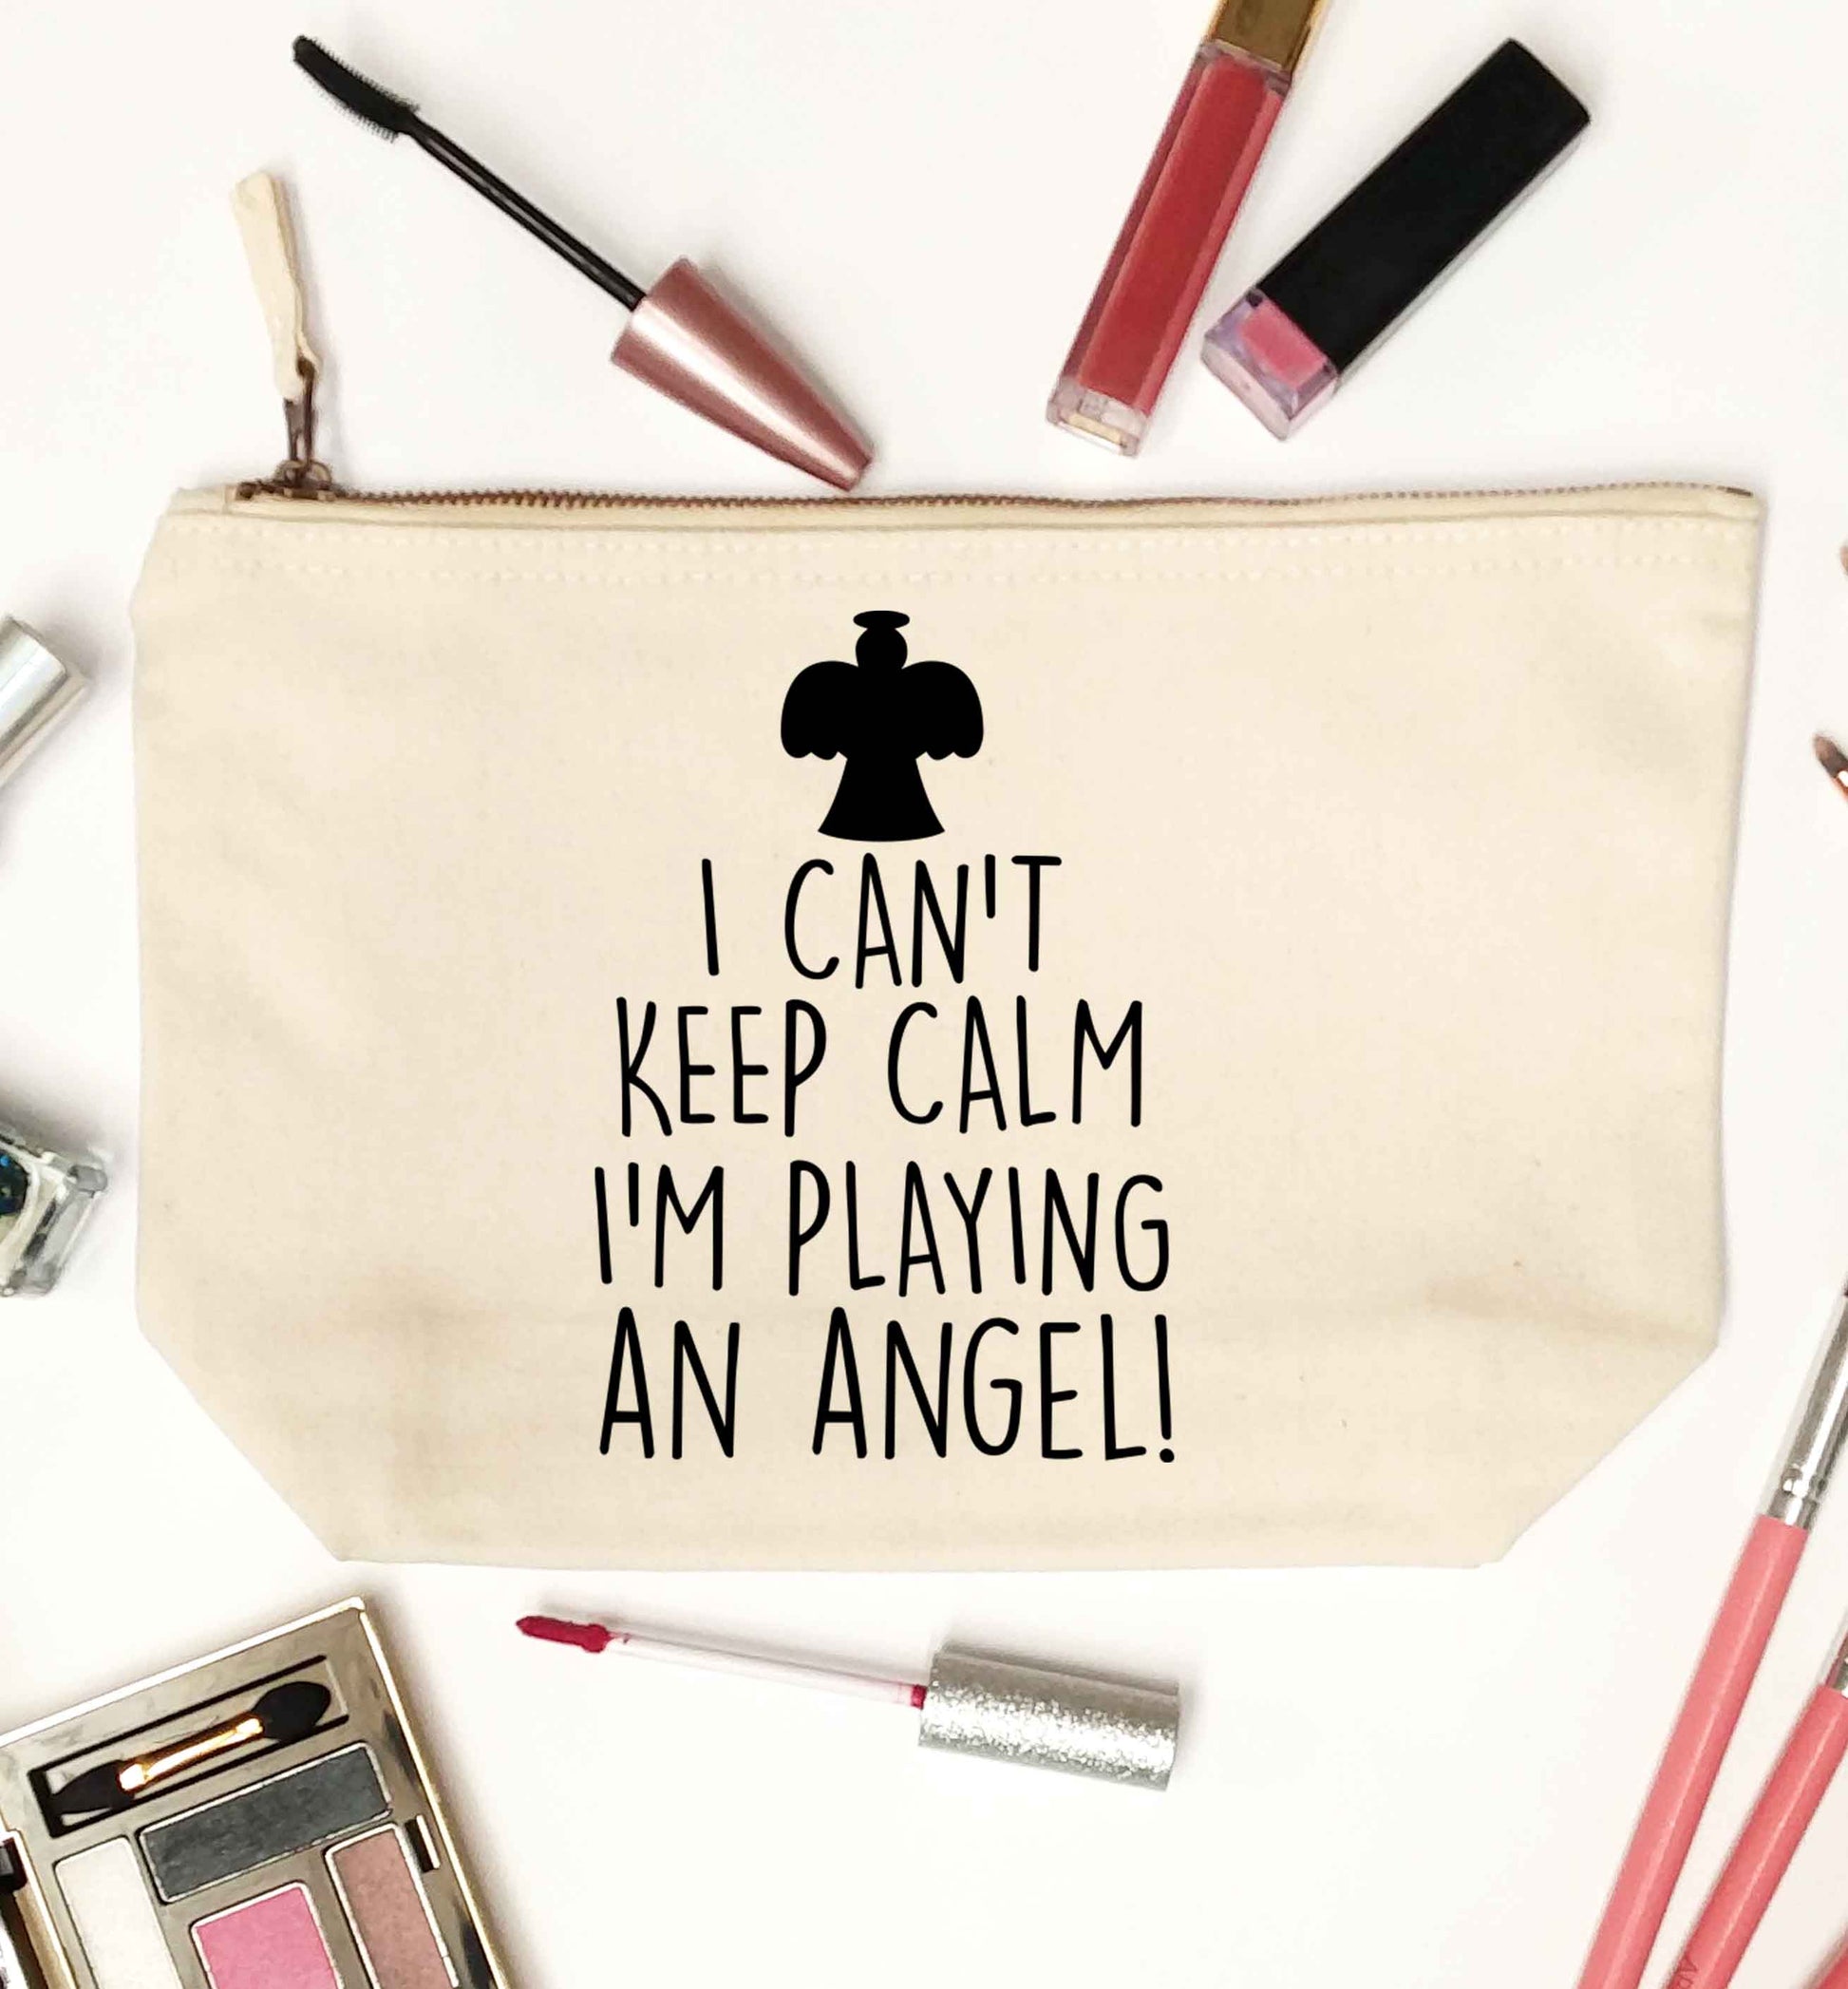 I can't keep calm I'm playing an angel! natural makeup bag